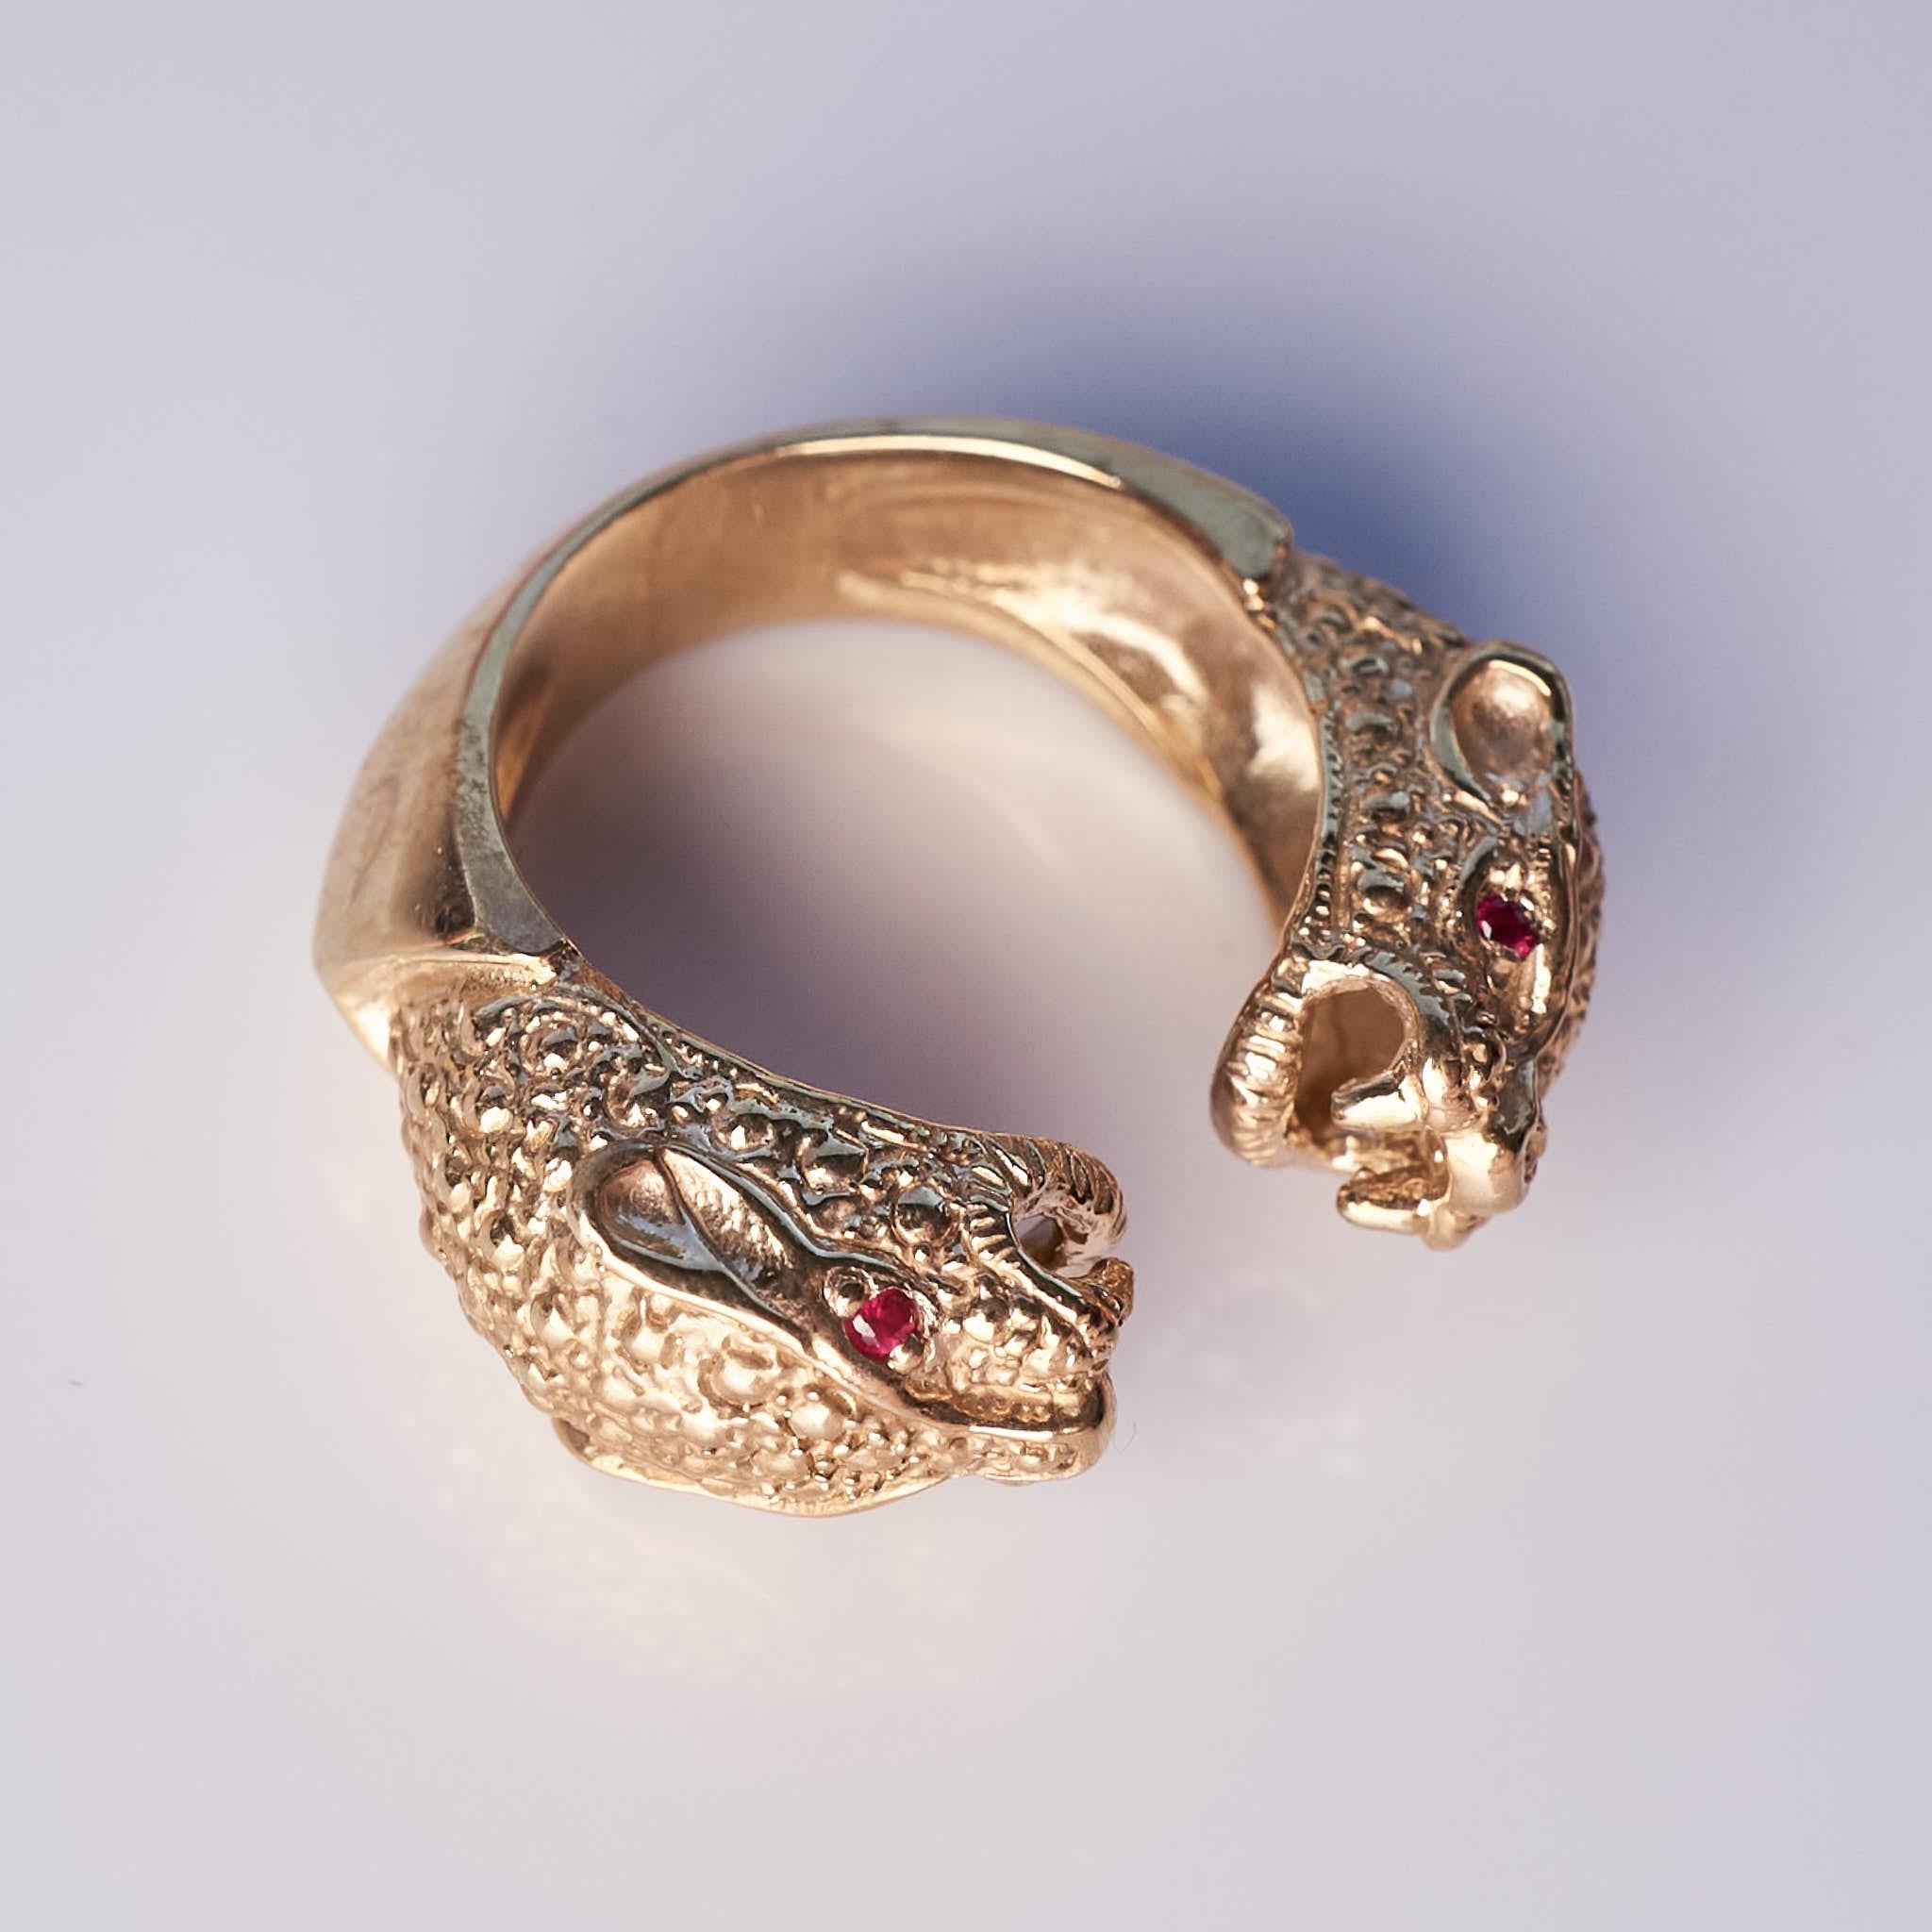 4 pcs Ruby Jaguar Ring Bronze Animal J Dauphin
J DAUPHIN Ring 